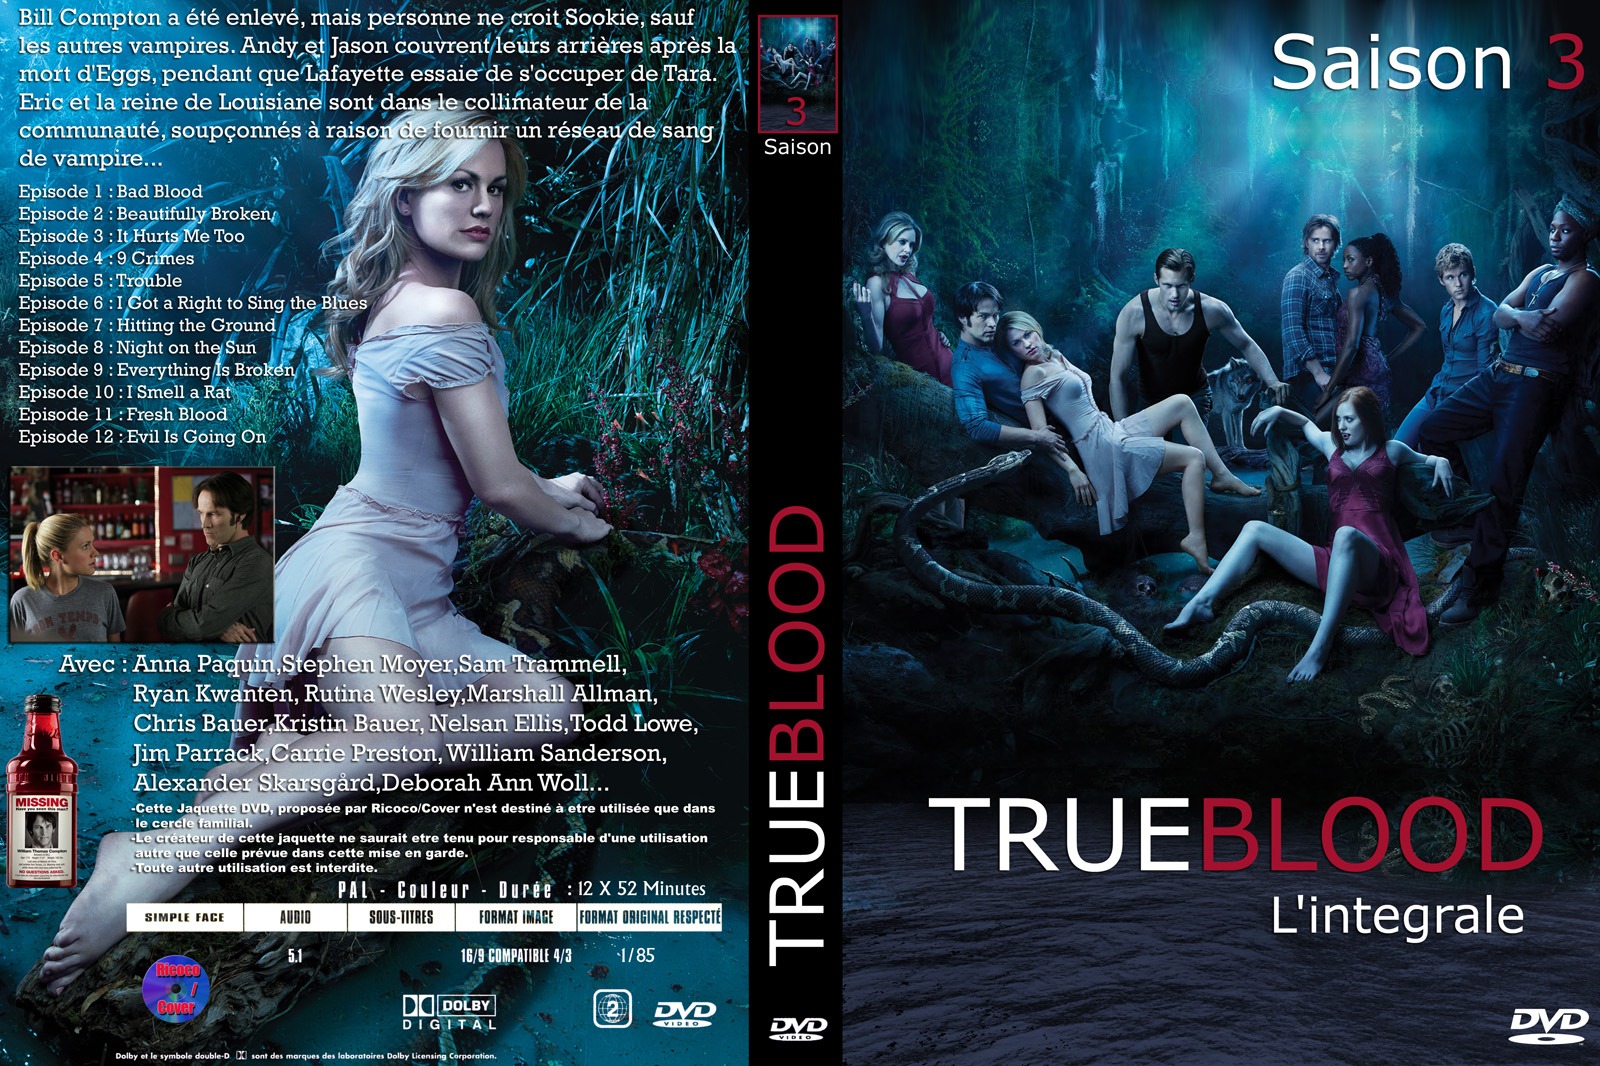 Jaquette DVD True blood saison 3 custom